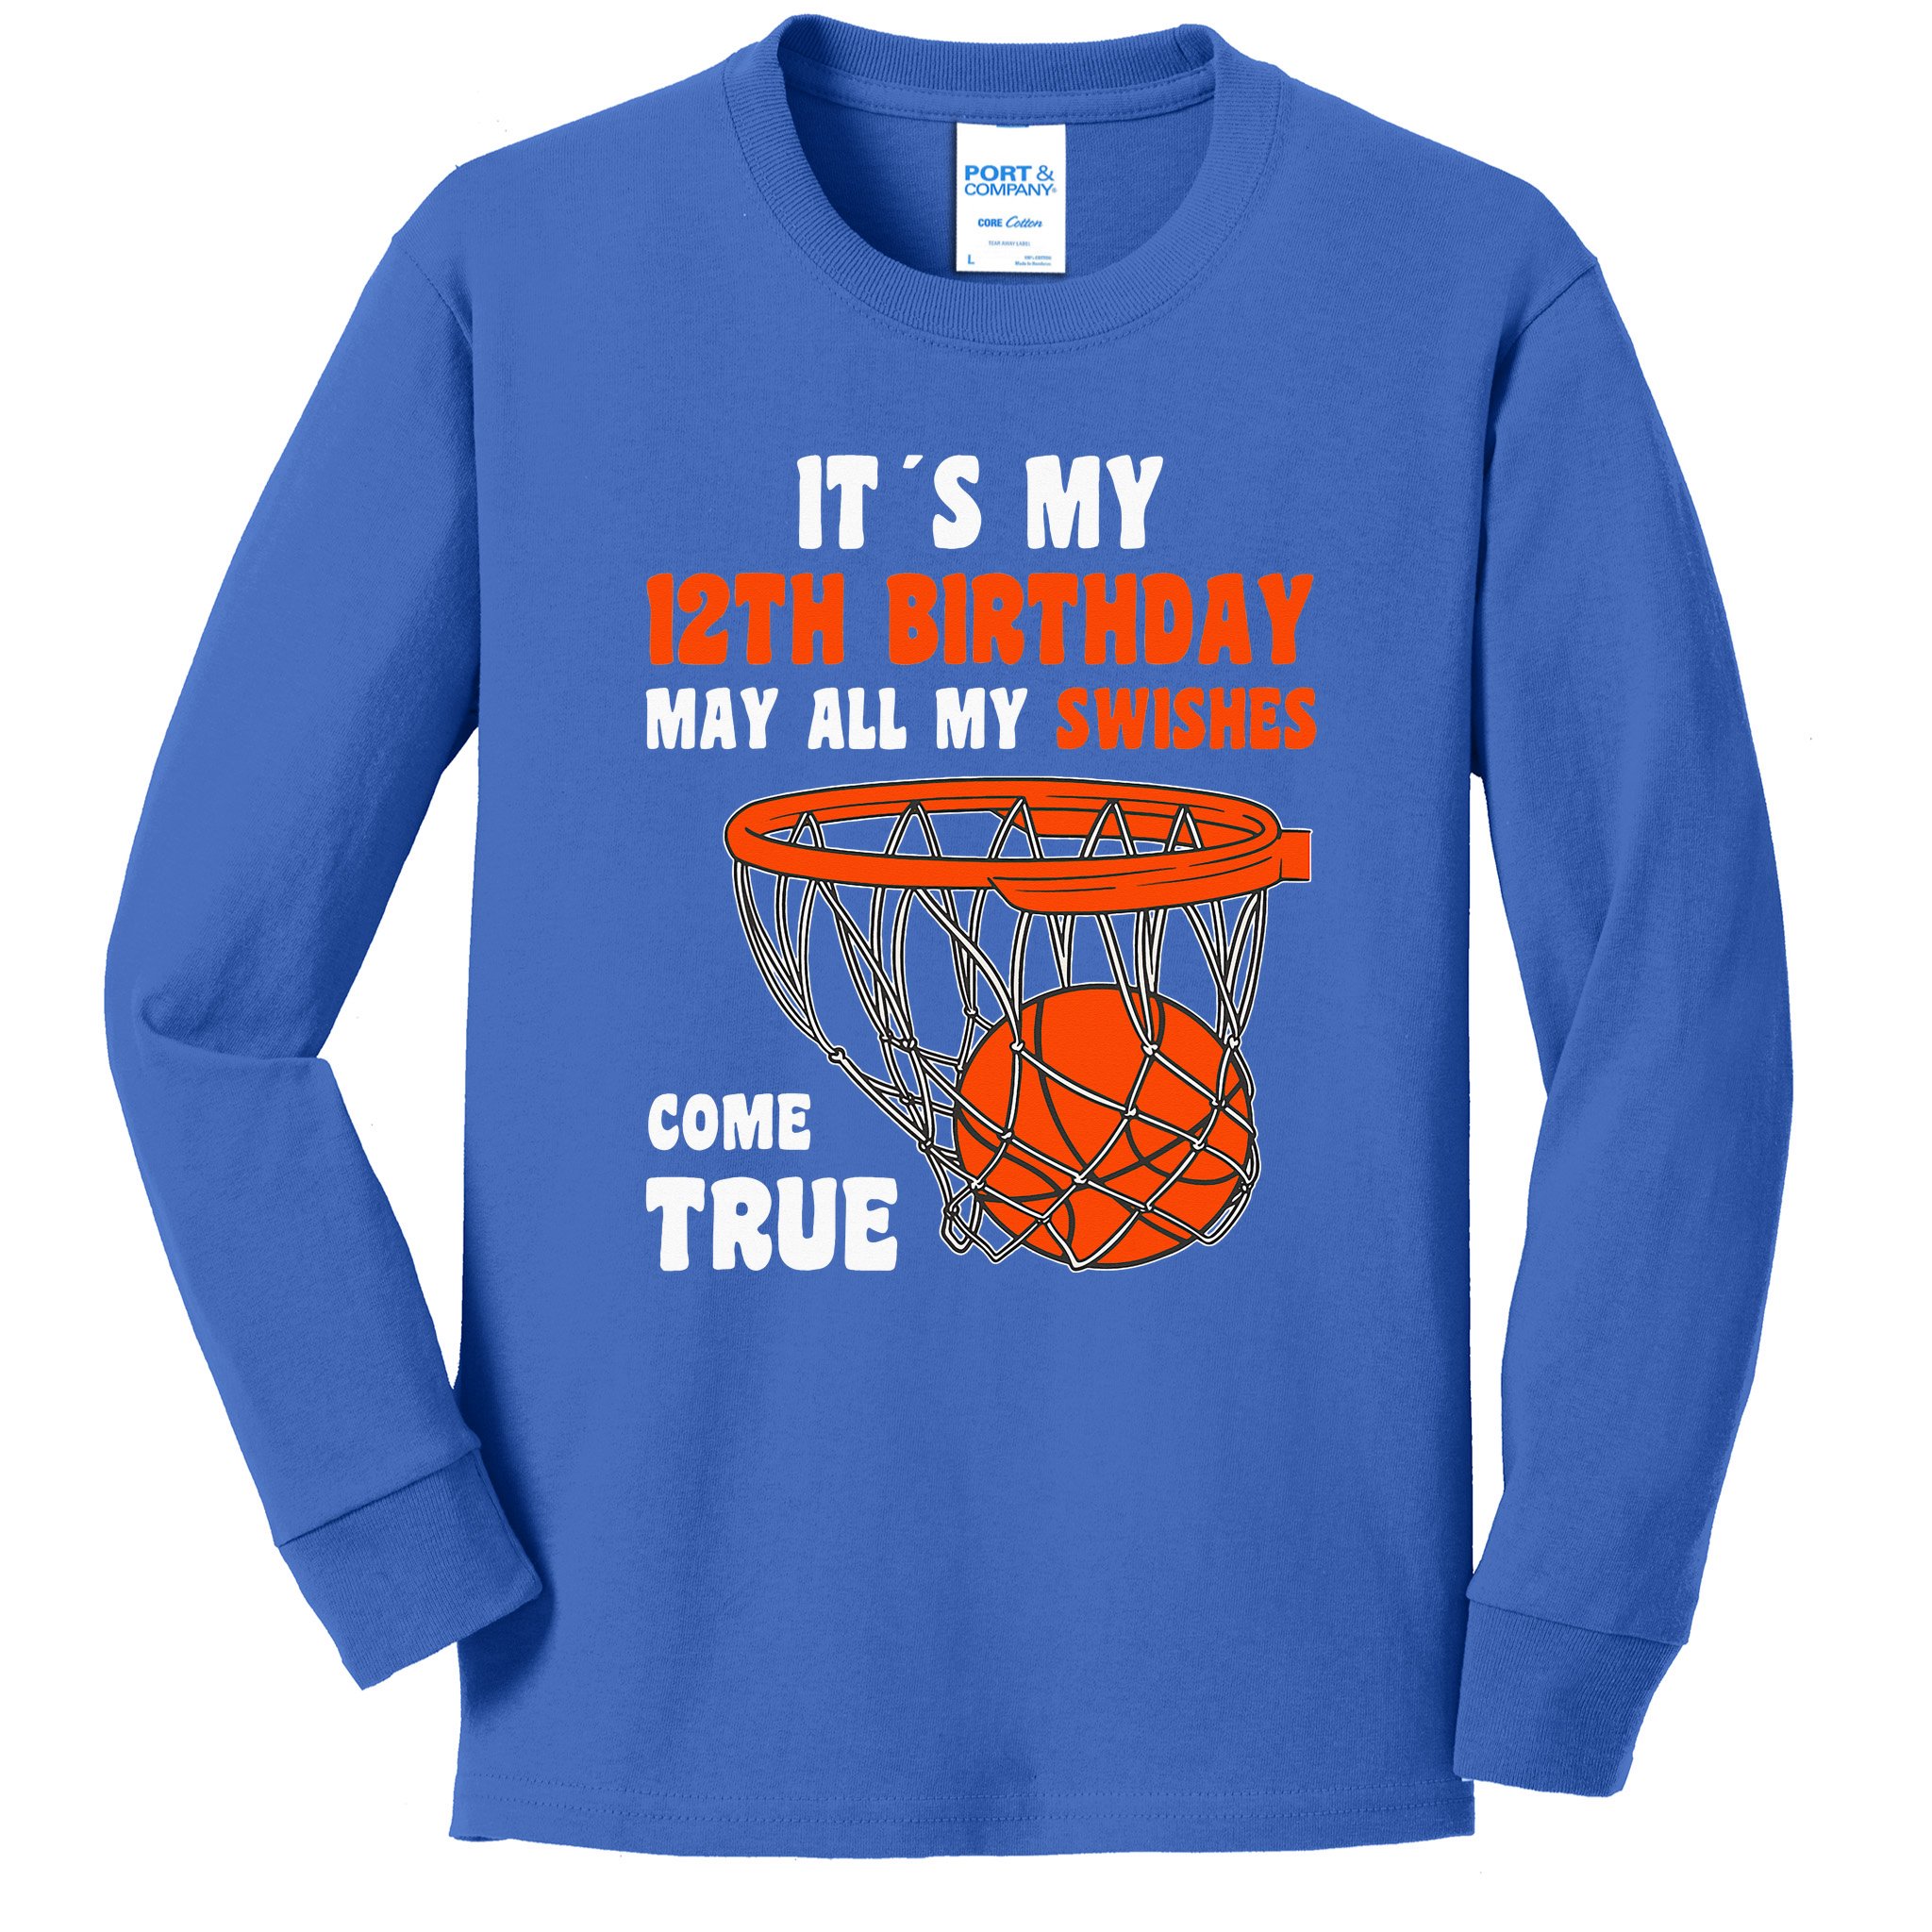 old basketball shirts